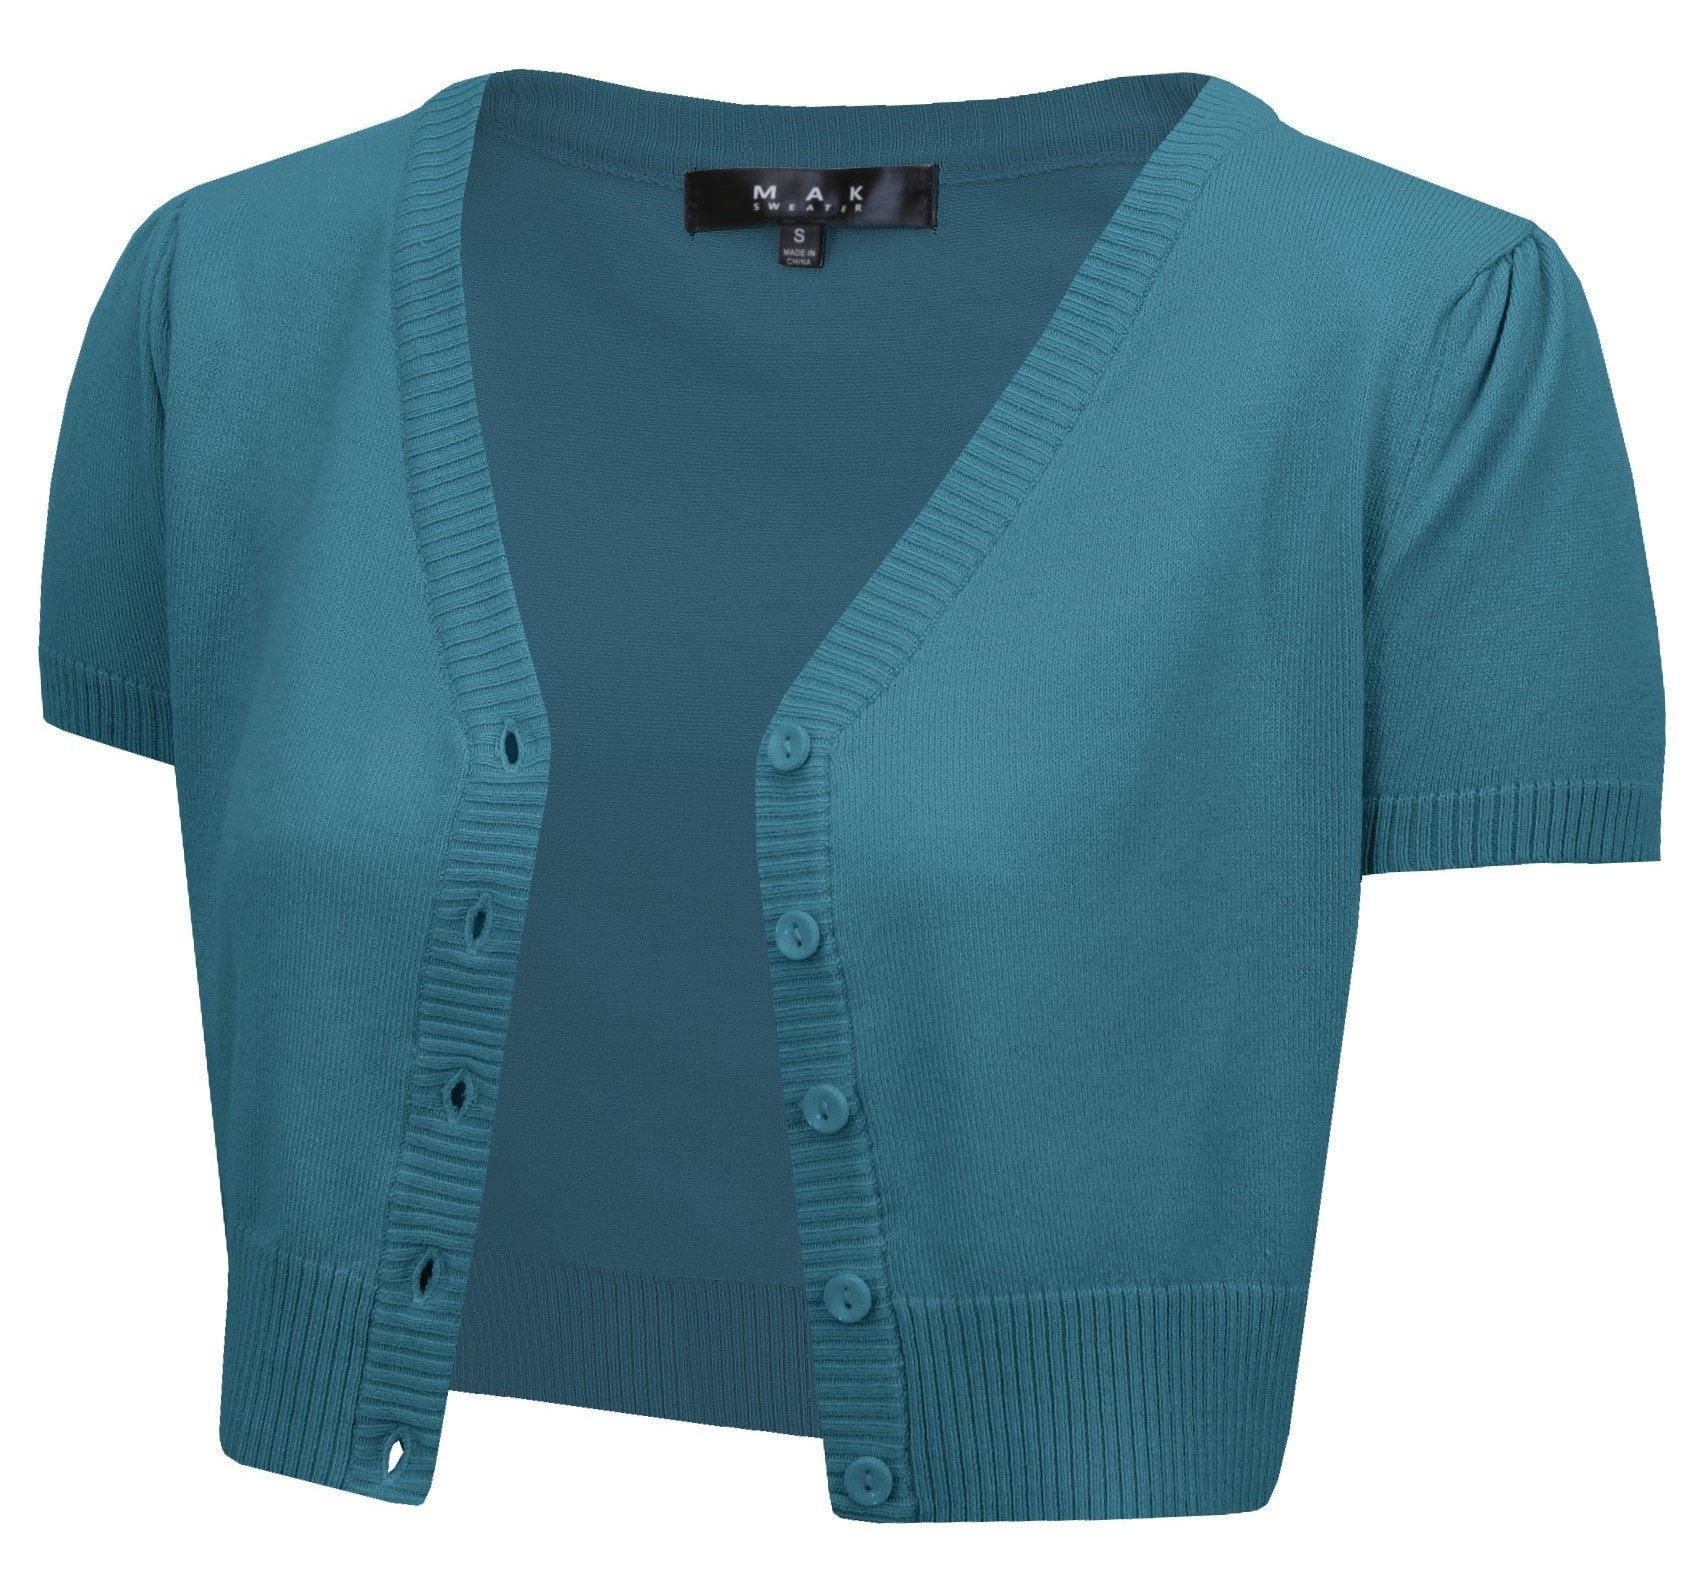 FLORIA Womens Button Down Short Sleeve Cropped Bolero Cardigan Sweater S-4X